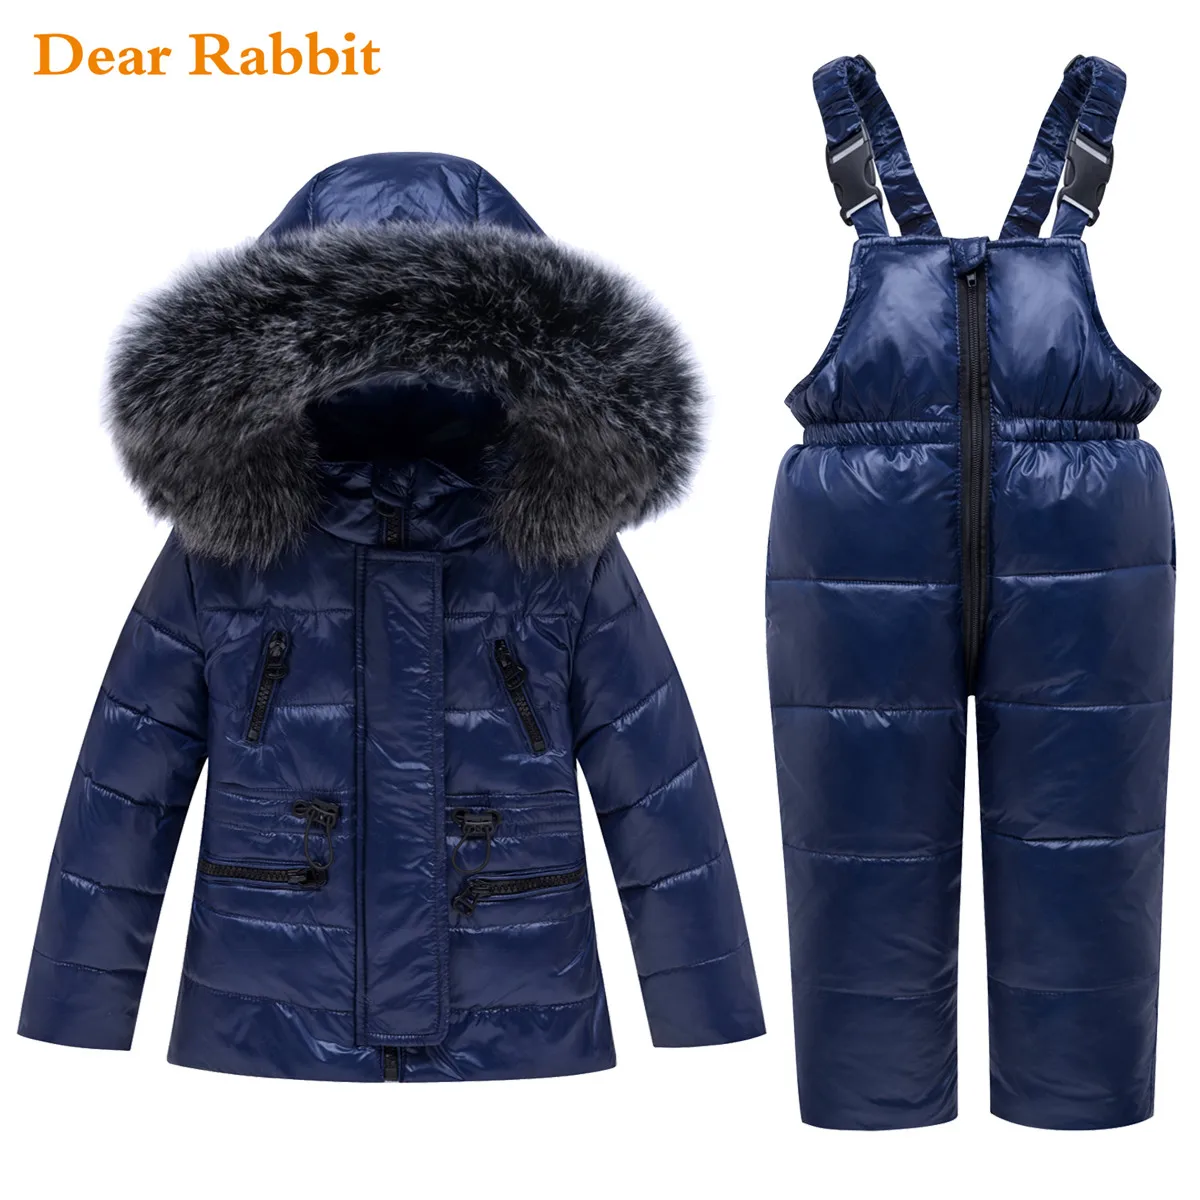 Winter Baby Boys Girl clothing Set warm Down Jacket coat Snowsuit Children parka real fur Kids Clothes Overalls infant overcoat